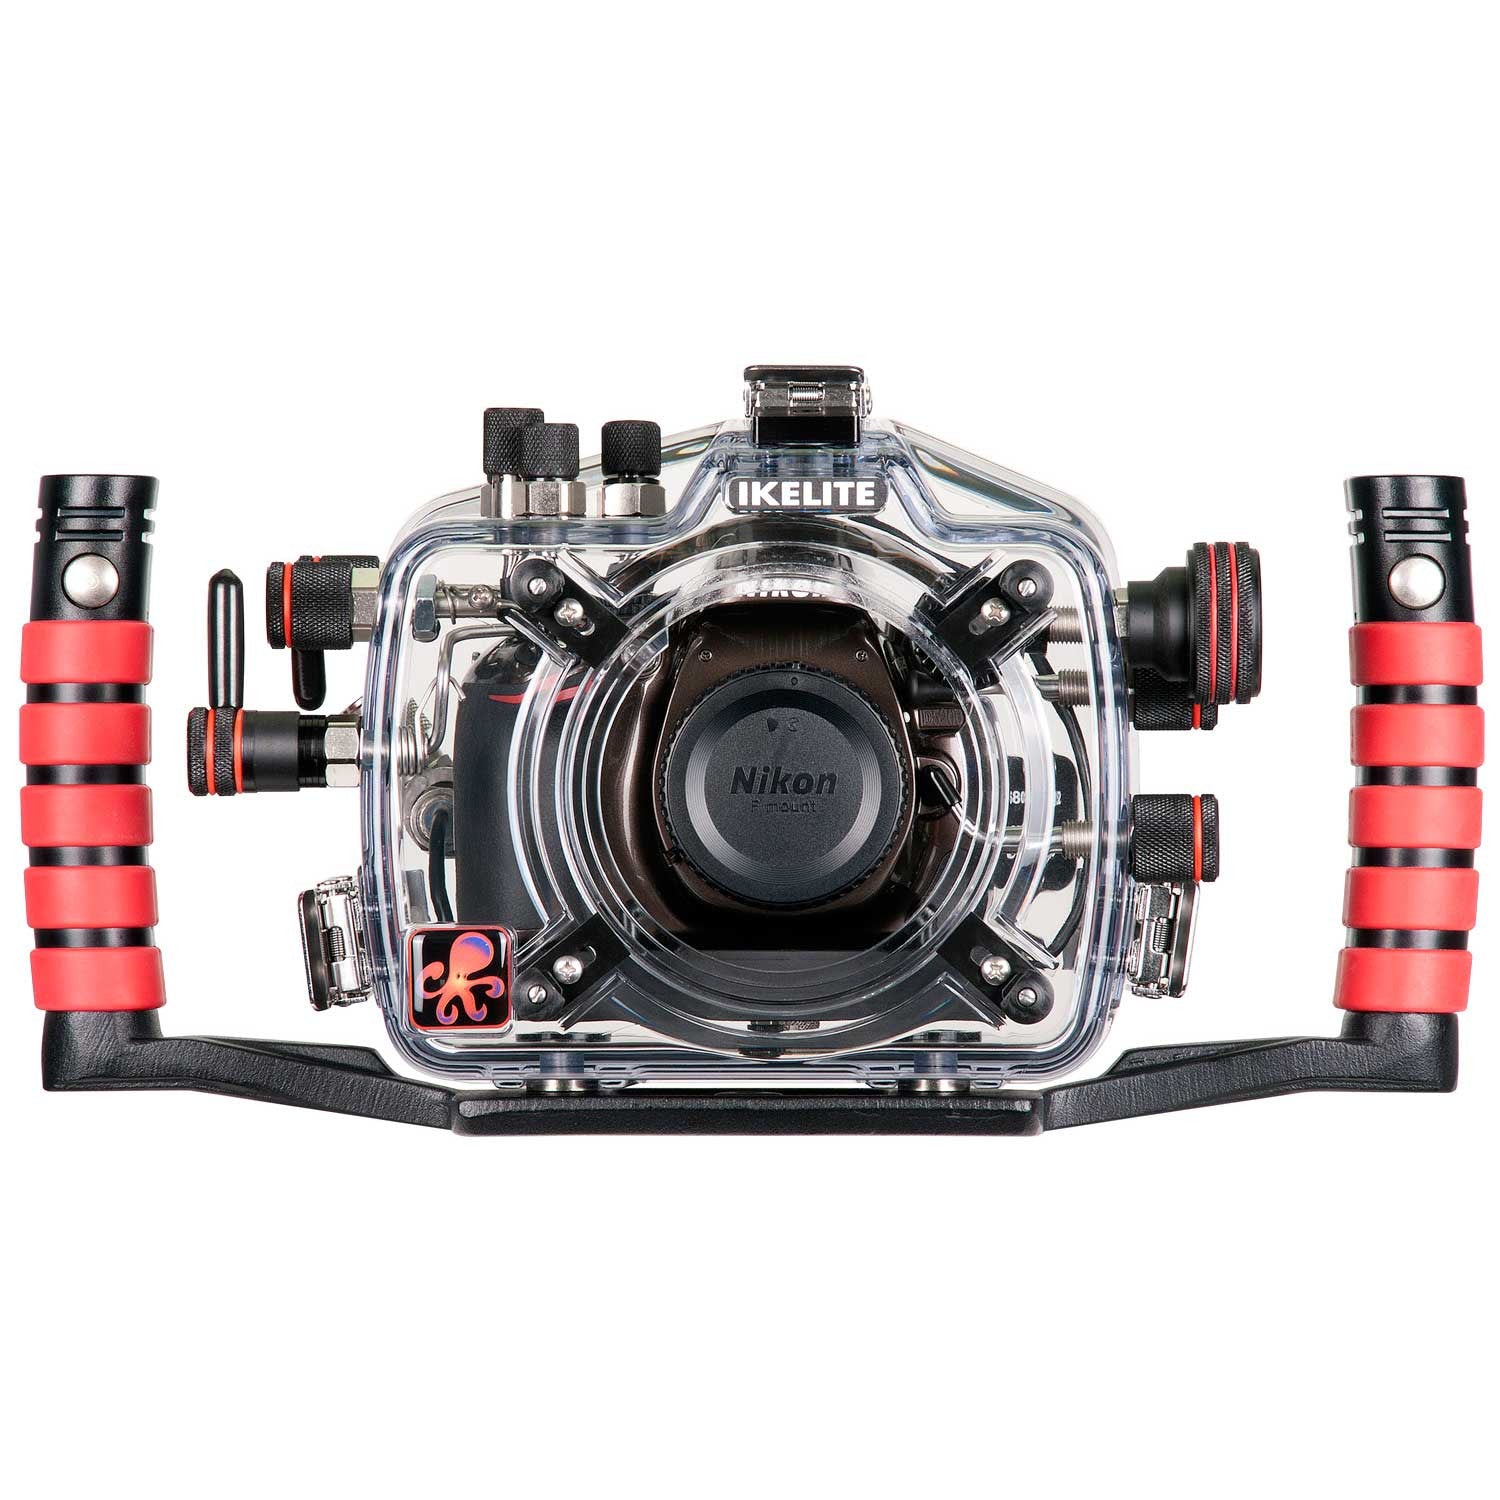 200FL Underwater TTL Housing for Nikon D5200 DSLR Cameras